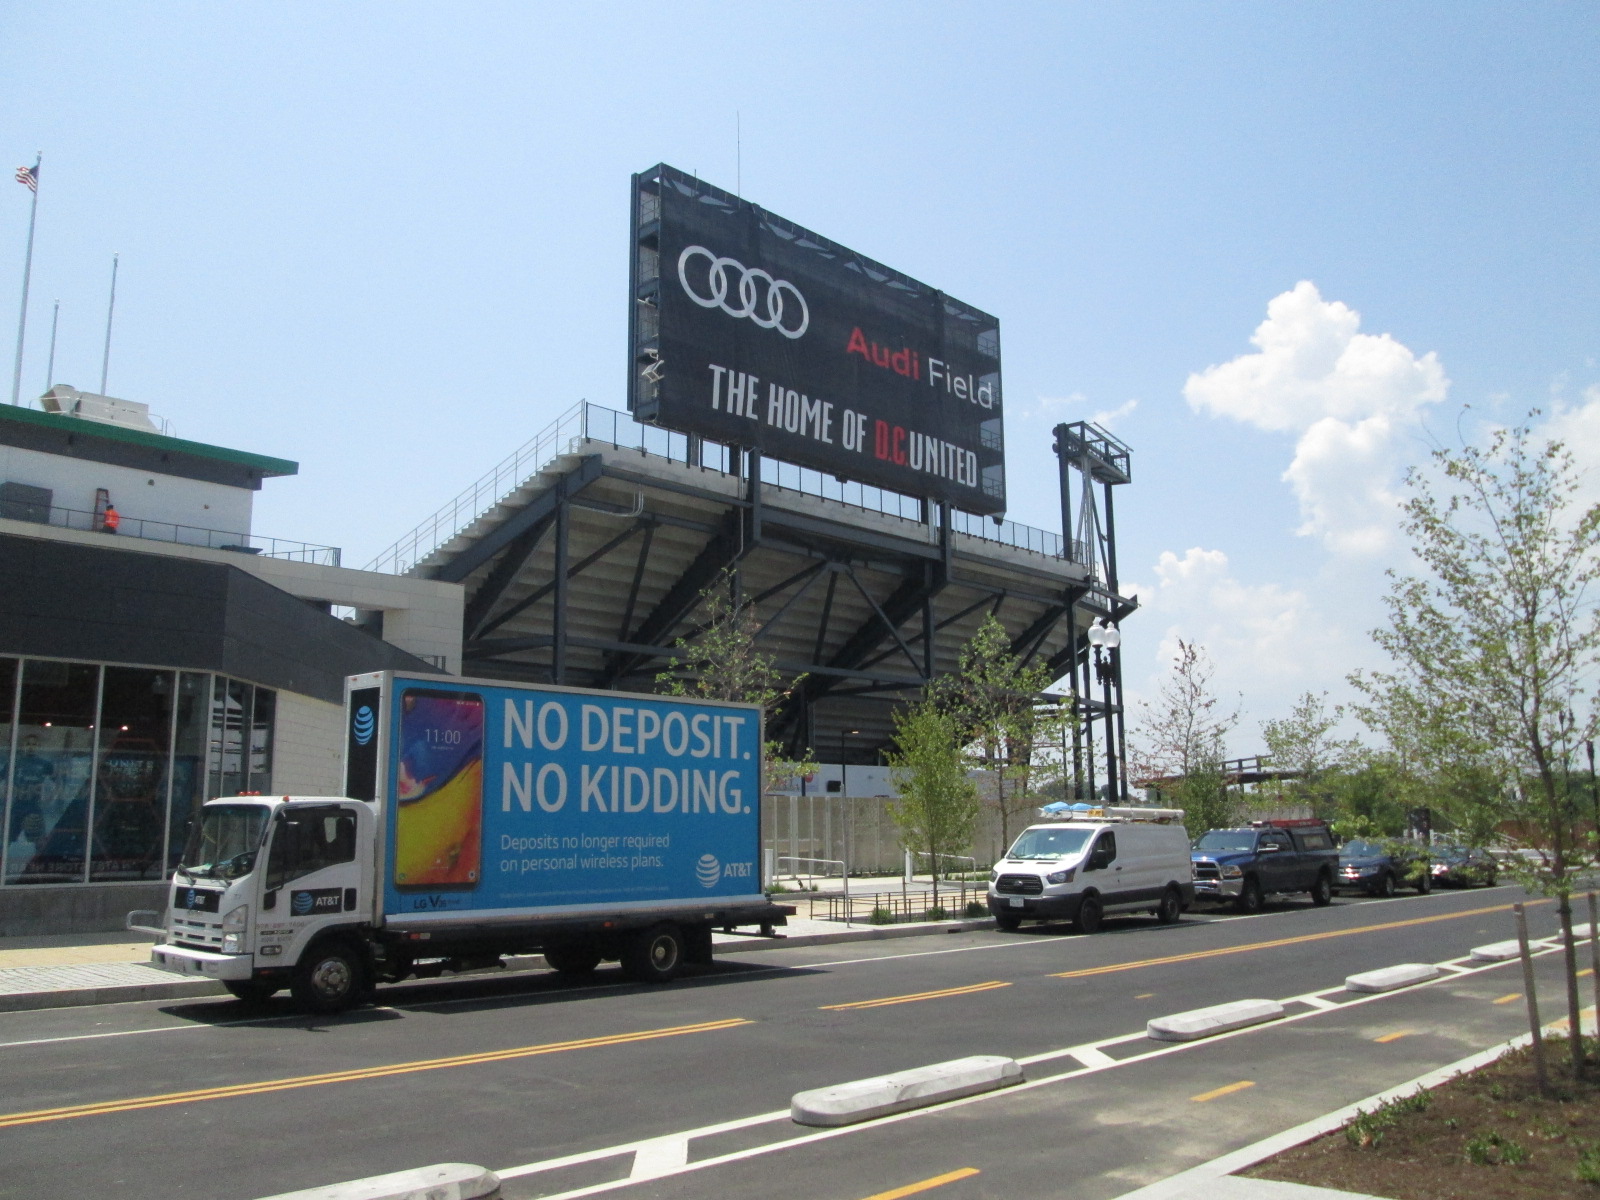 Billboard truck stopped in front of Audi Field in Washington DC